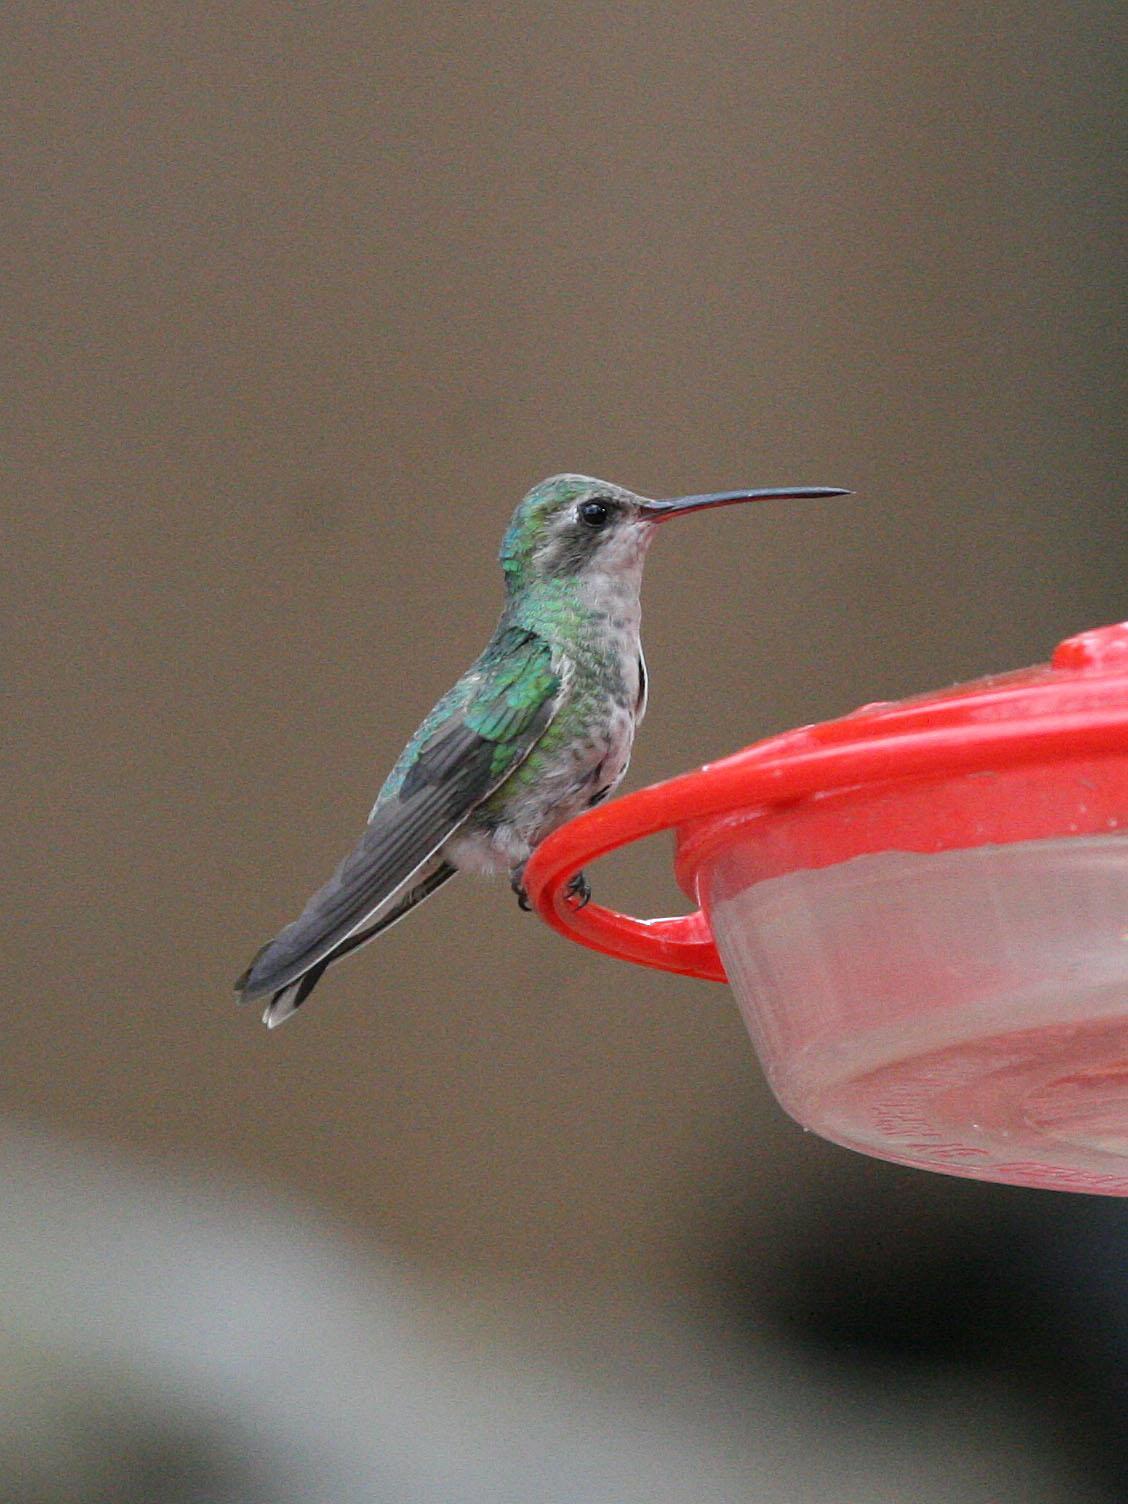 Broad-billed Hummingbird Photo by David Sarkozi